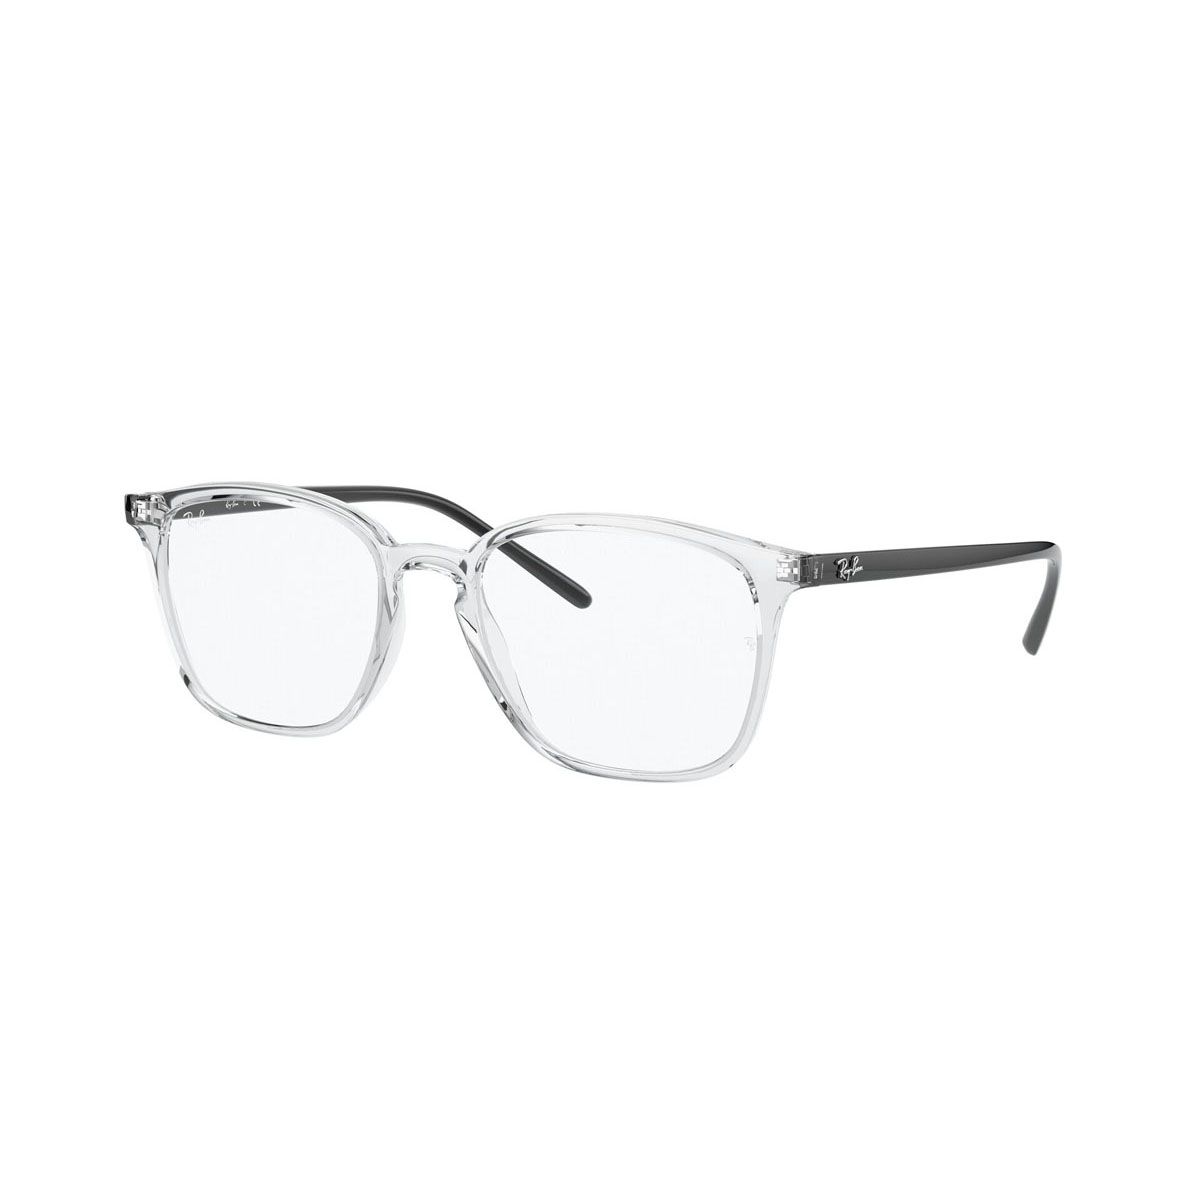 RX7185 Square Eyeglasses 5943 - size  52